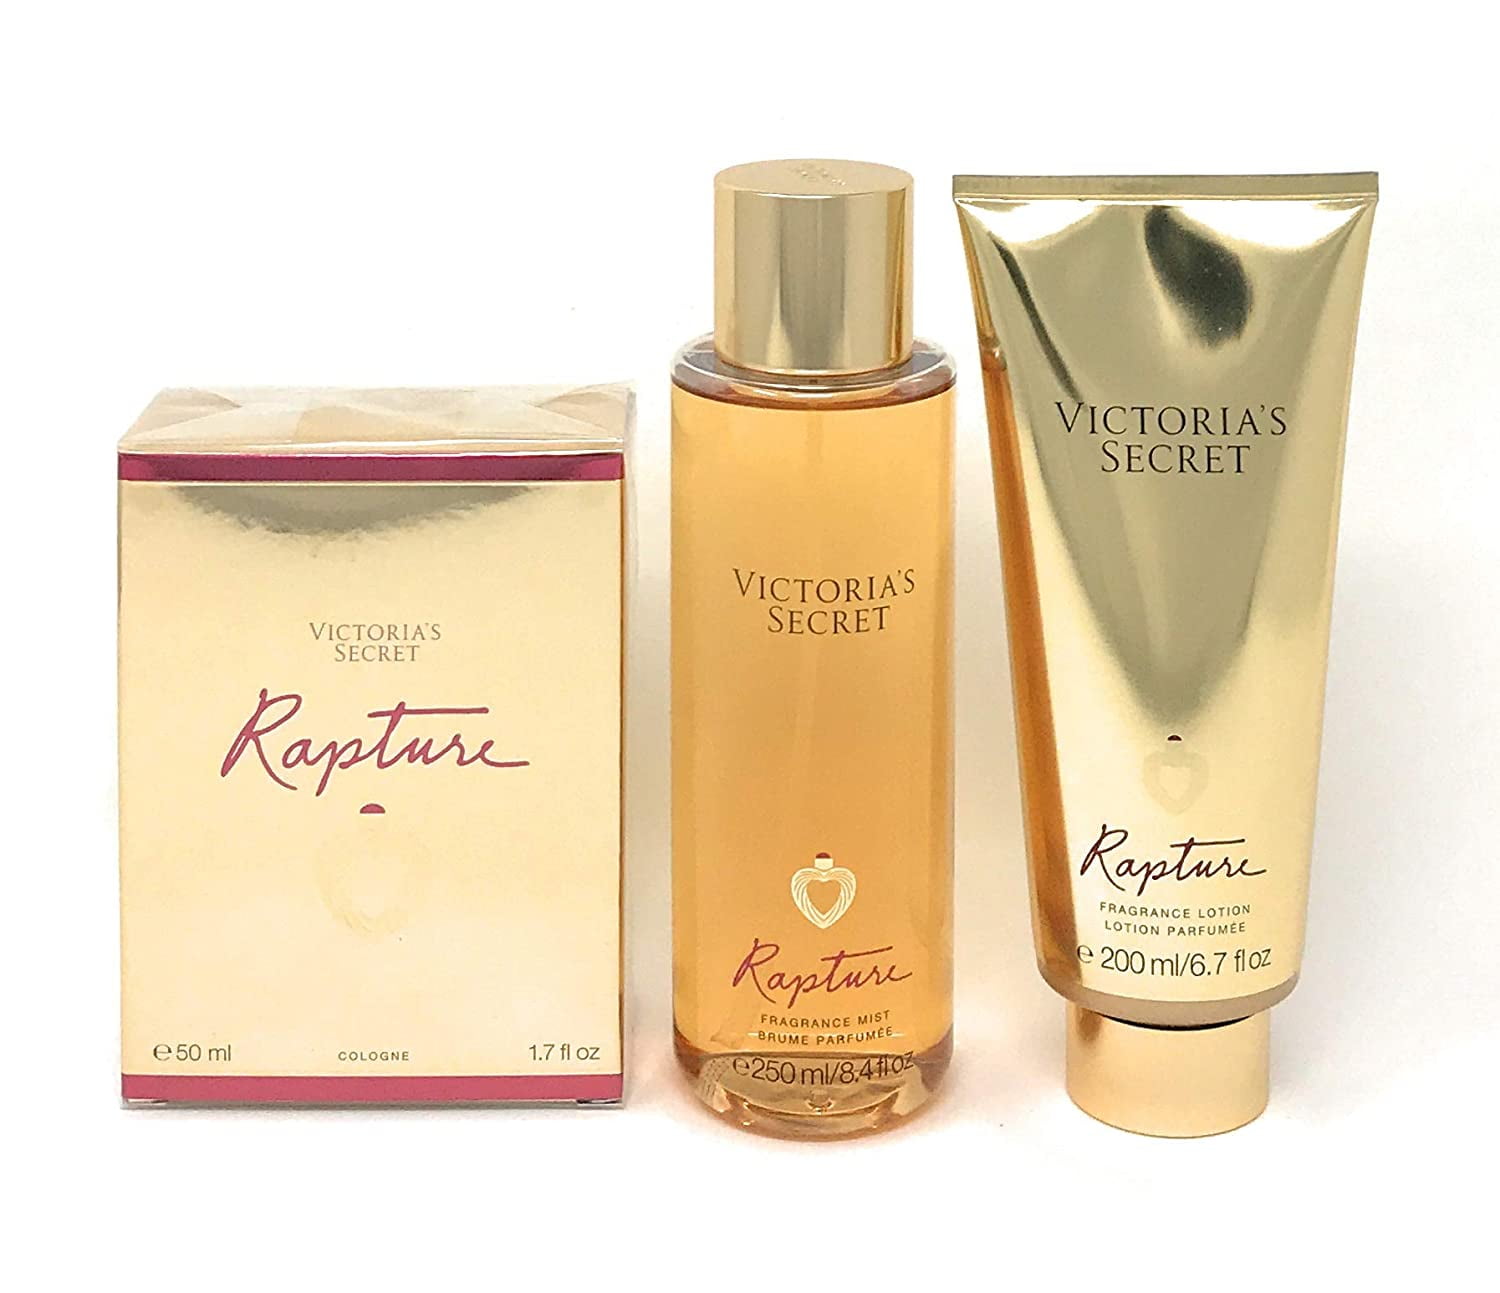 Victoria's Secret Rapture Perfume Gift set of Perfume, Lotion and Mist